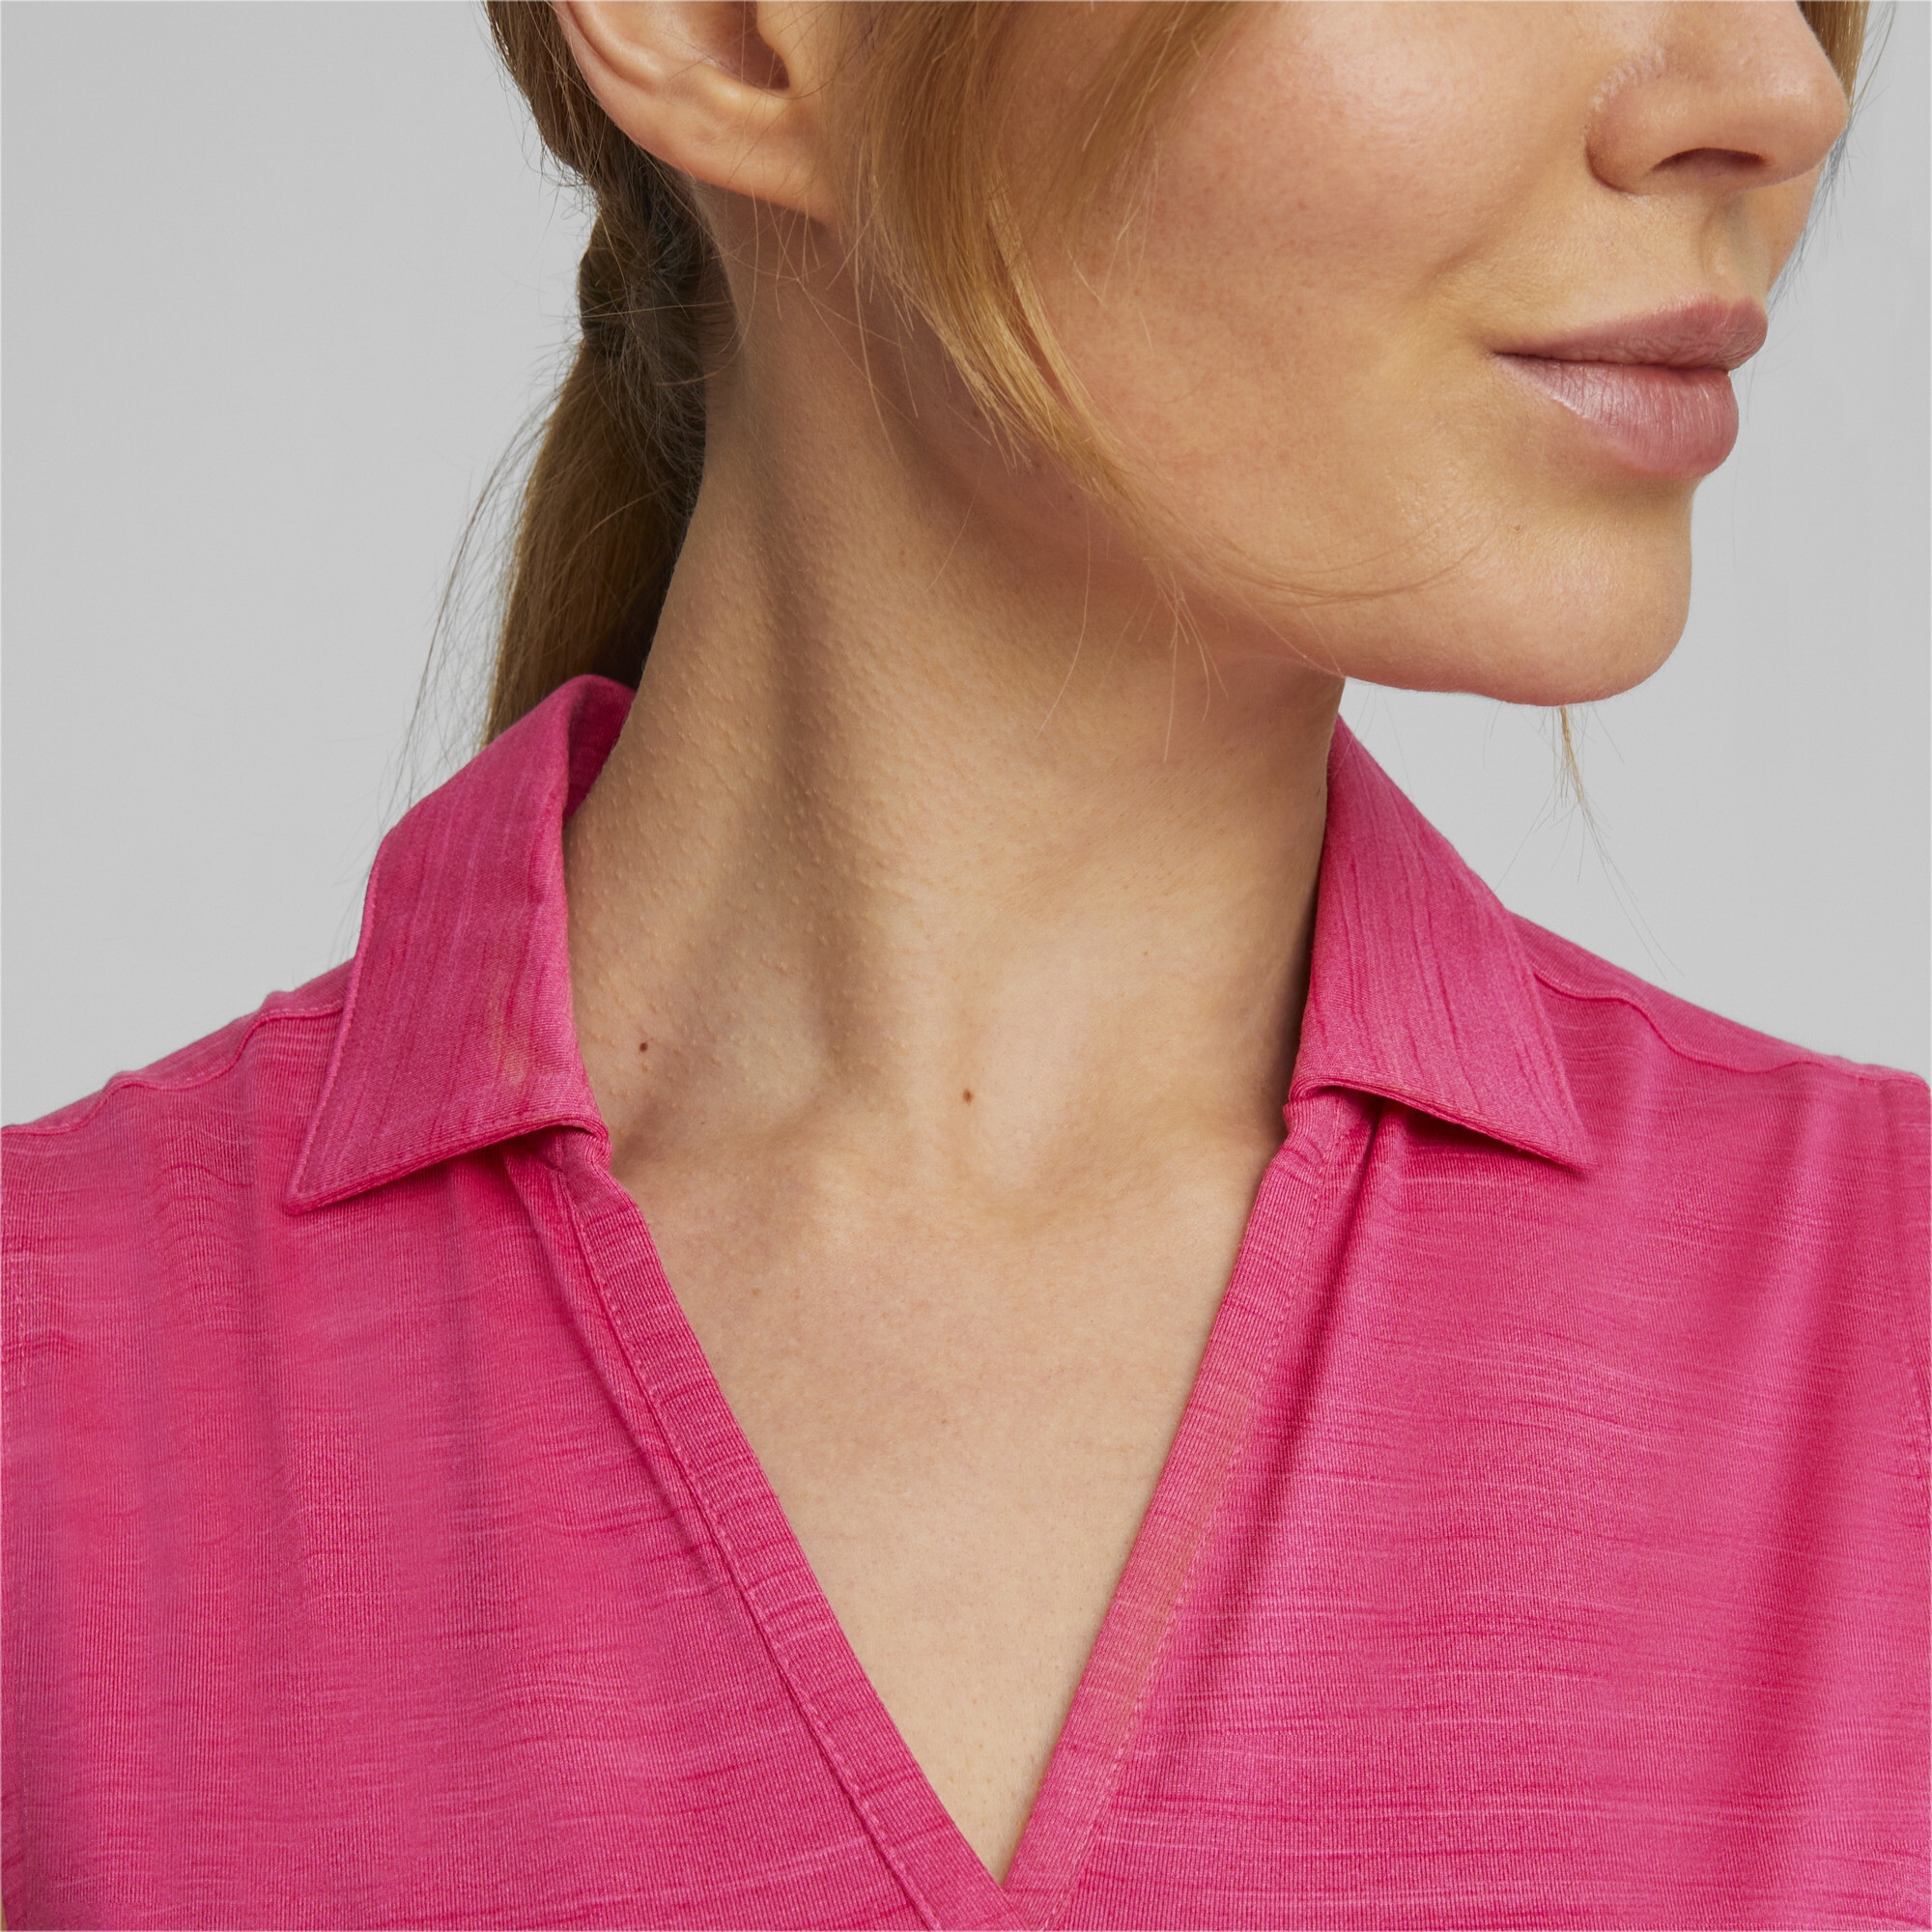 Women's Puma CLOUDSPUN Coast Sleeveless's Golf Polo T-Shirt, Pink T-Shirt, Size S T-Shirt, Clothing